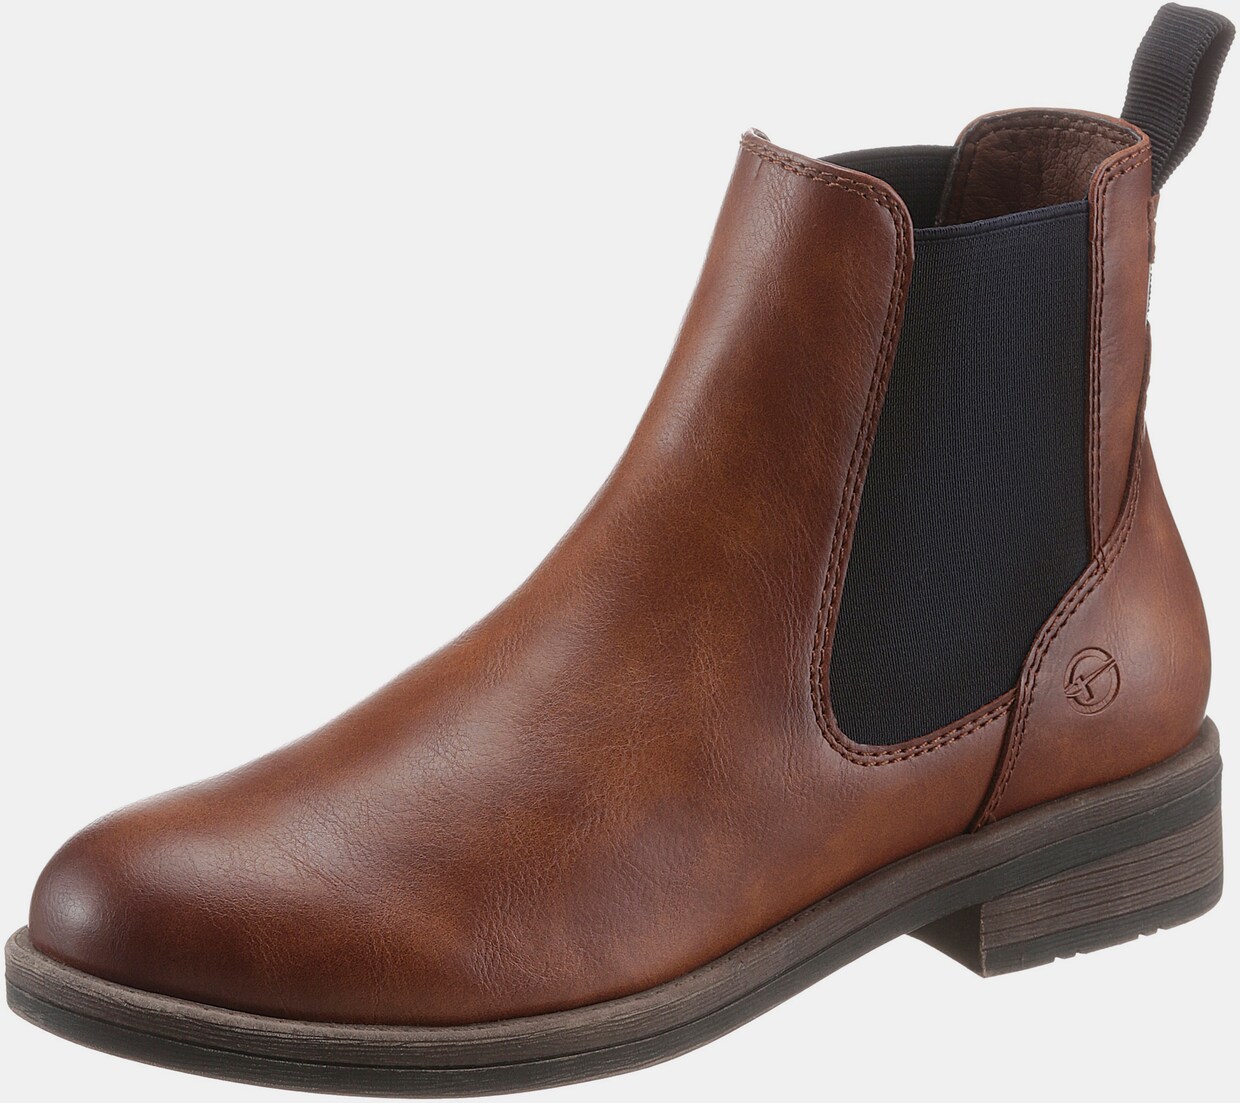 Tamaris Chelsea boots - cognac used